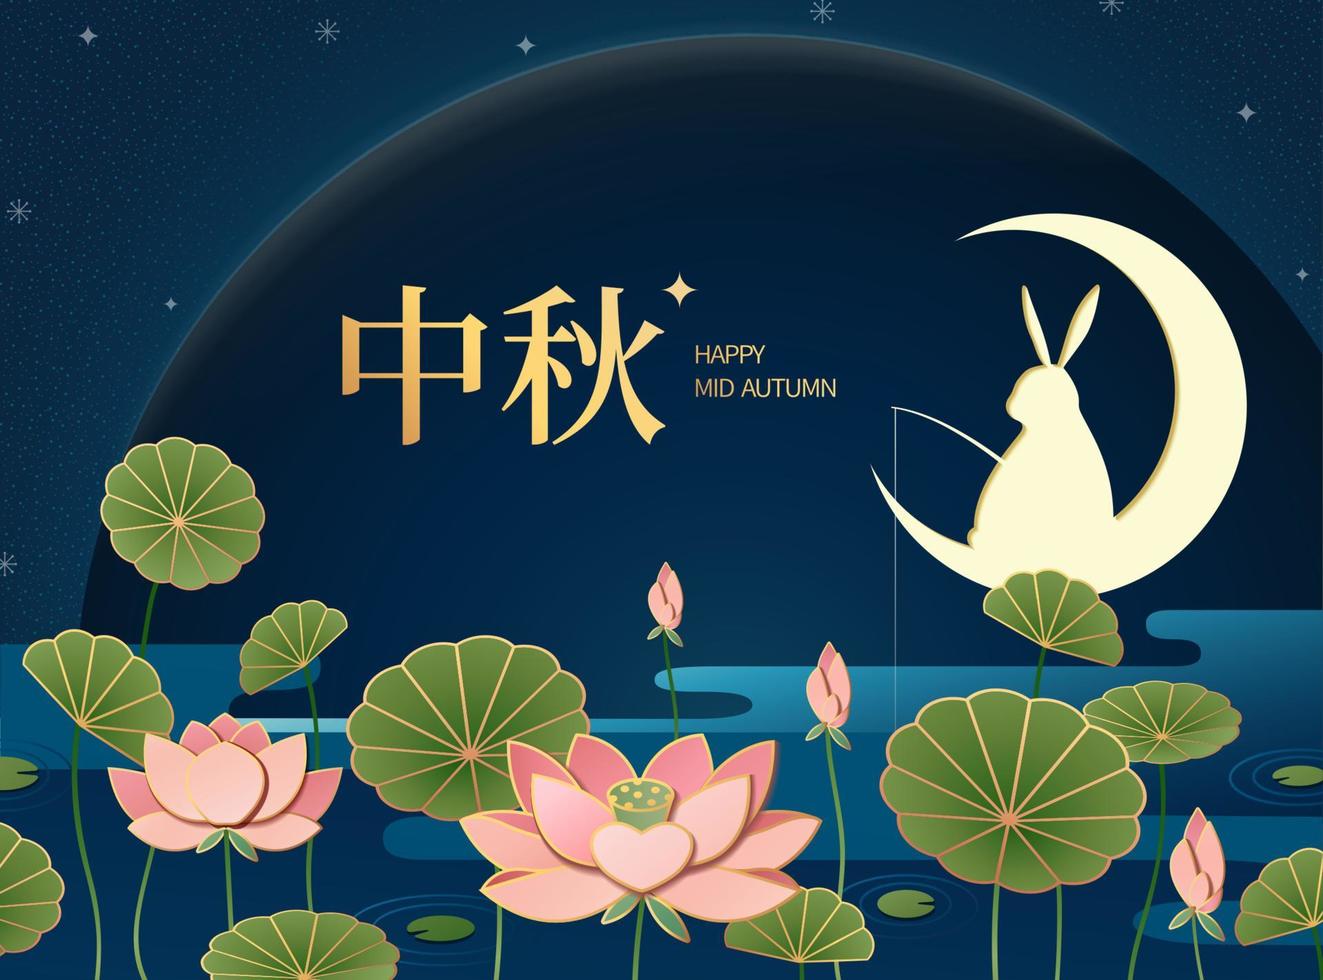 kanin fiske på lotus damm med Lycklig mitten höst festival skriven i kinesisk ord vektor